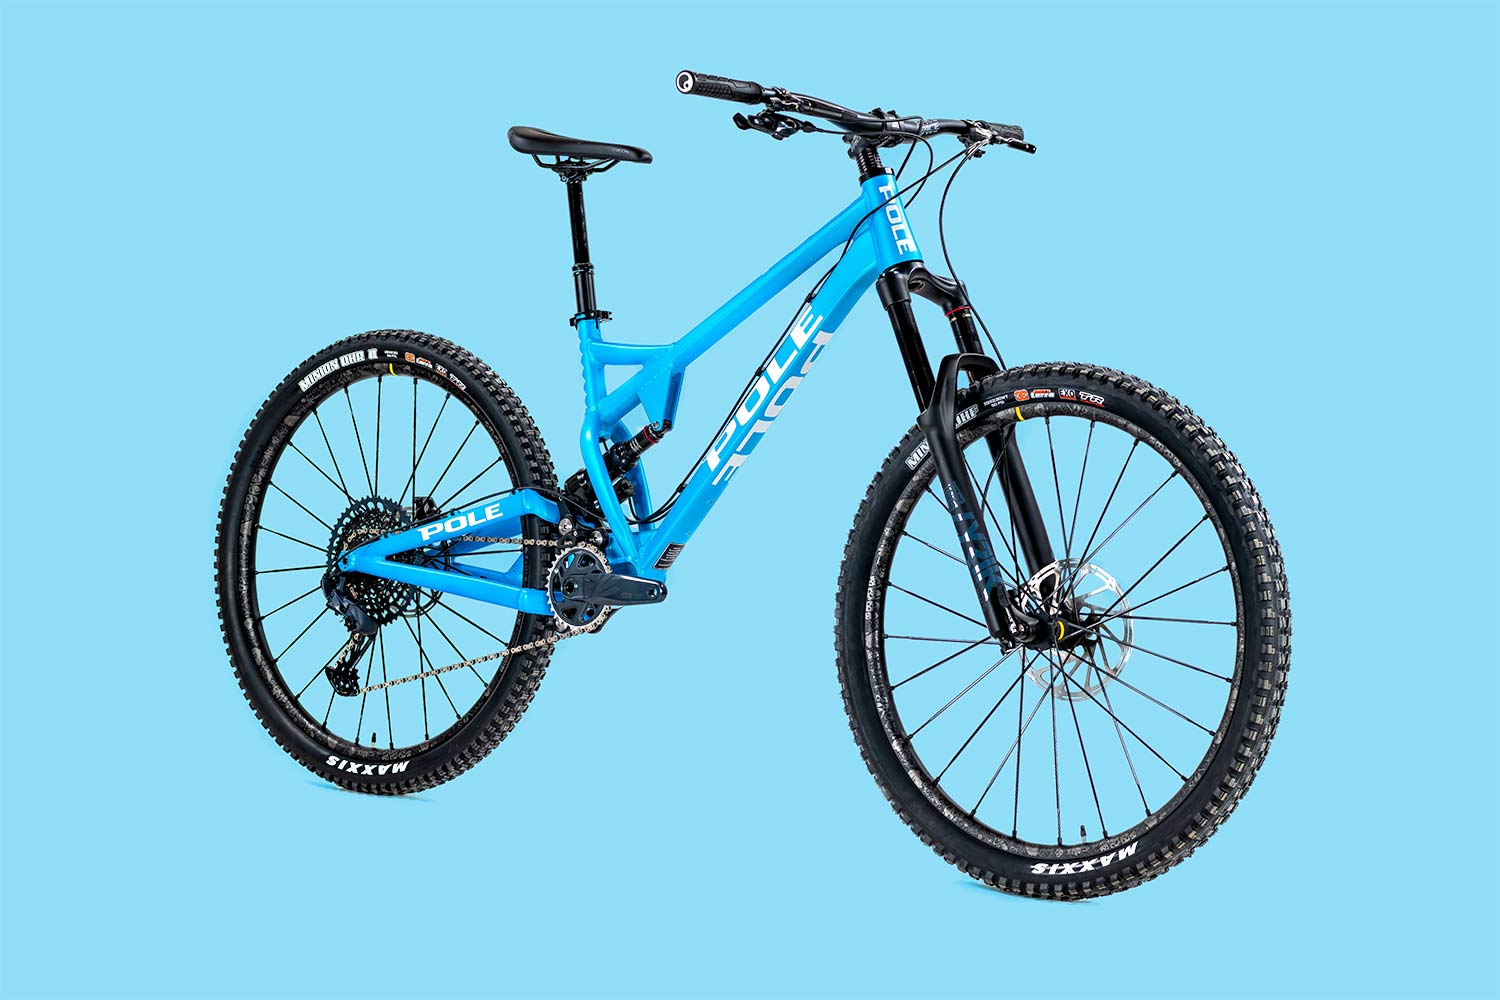 Pole Evolink 140 v1.4 all-mountain bike, updated progressive 29er trail enduro MTB, teaser